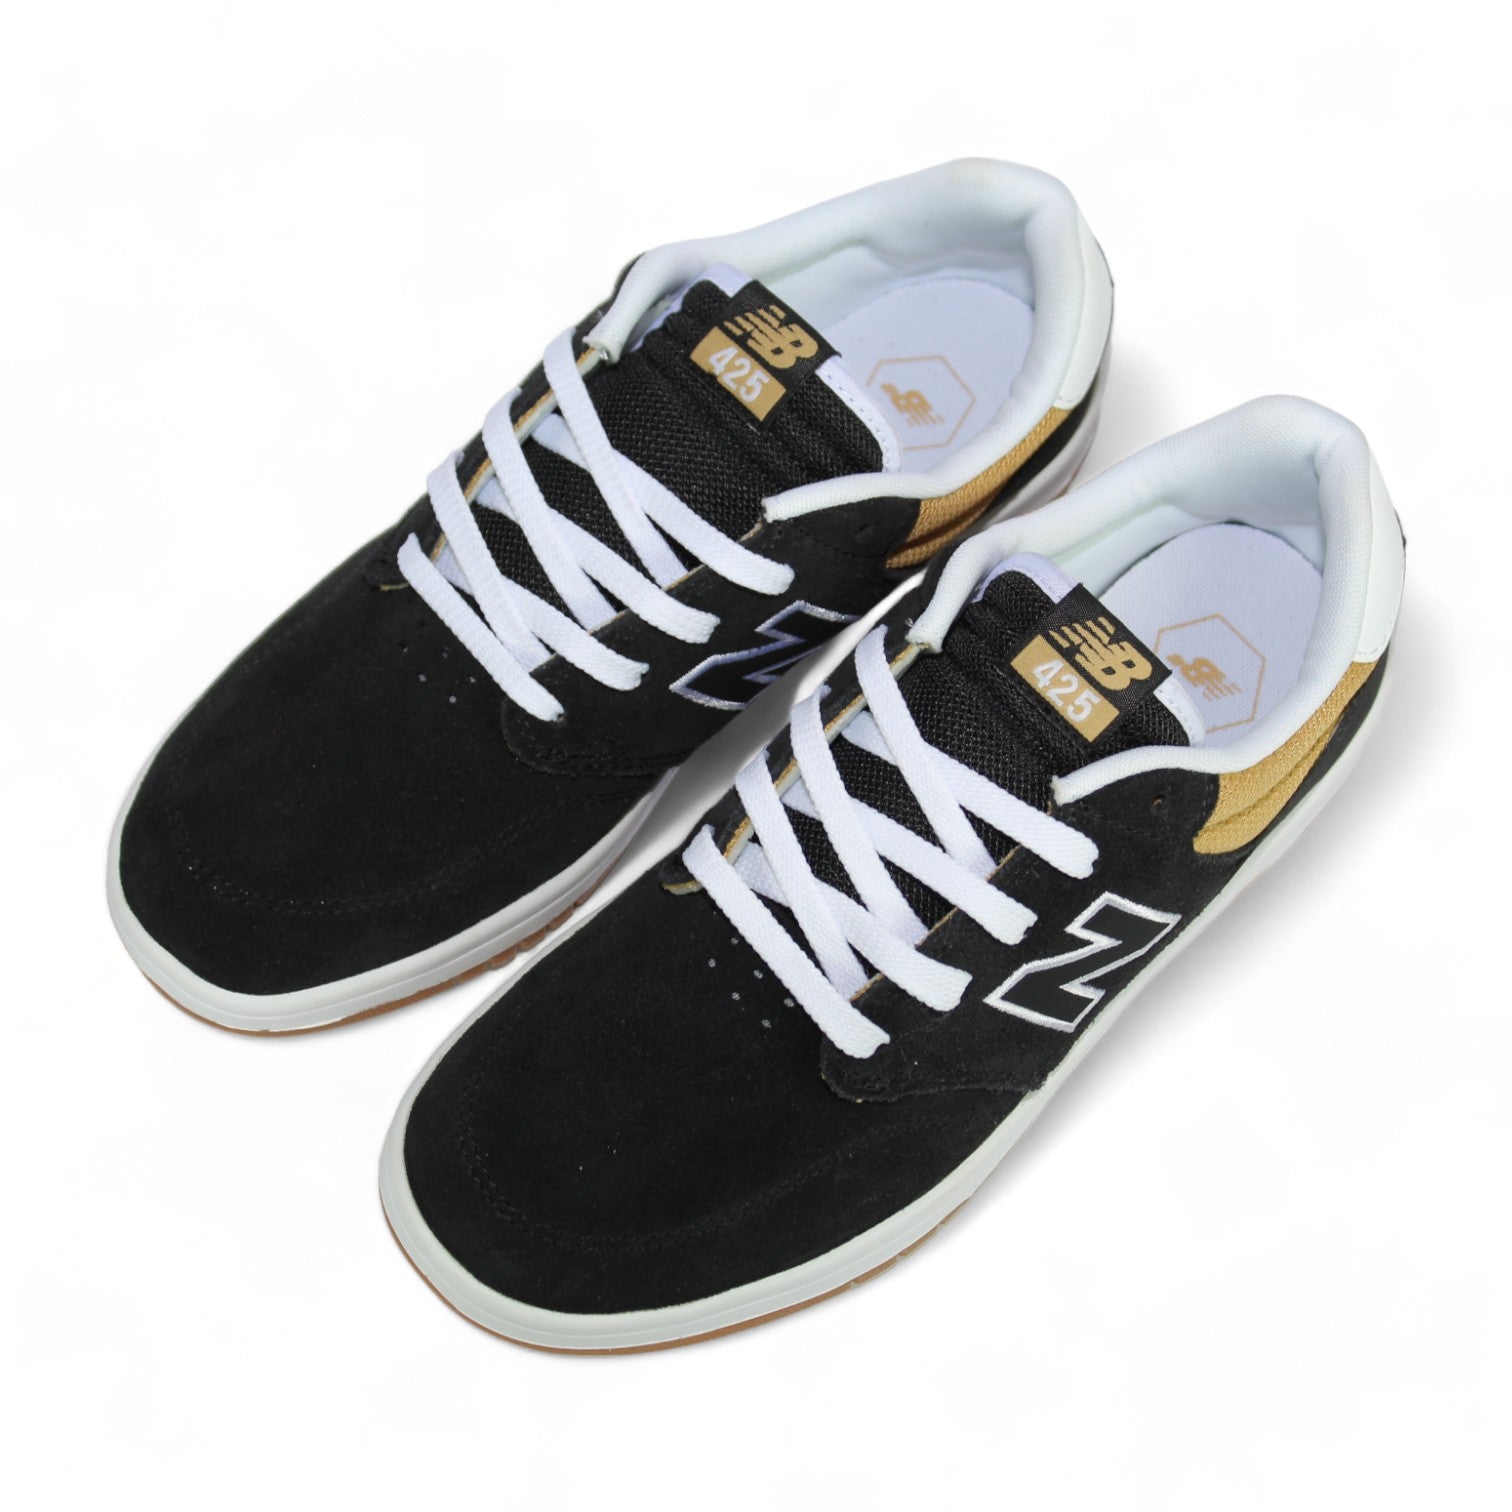 New Balance Numeric NM425BNT Shoes  - Black/White